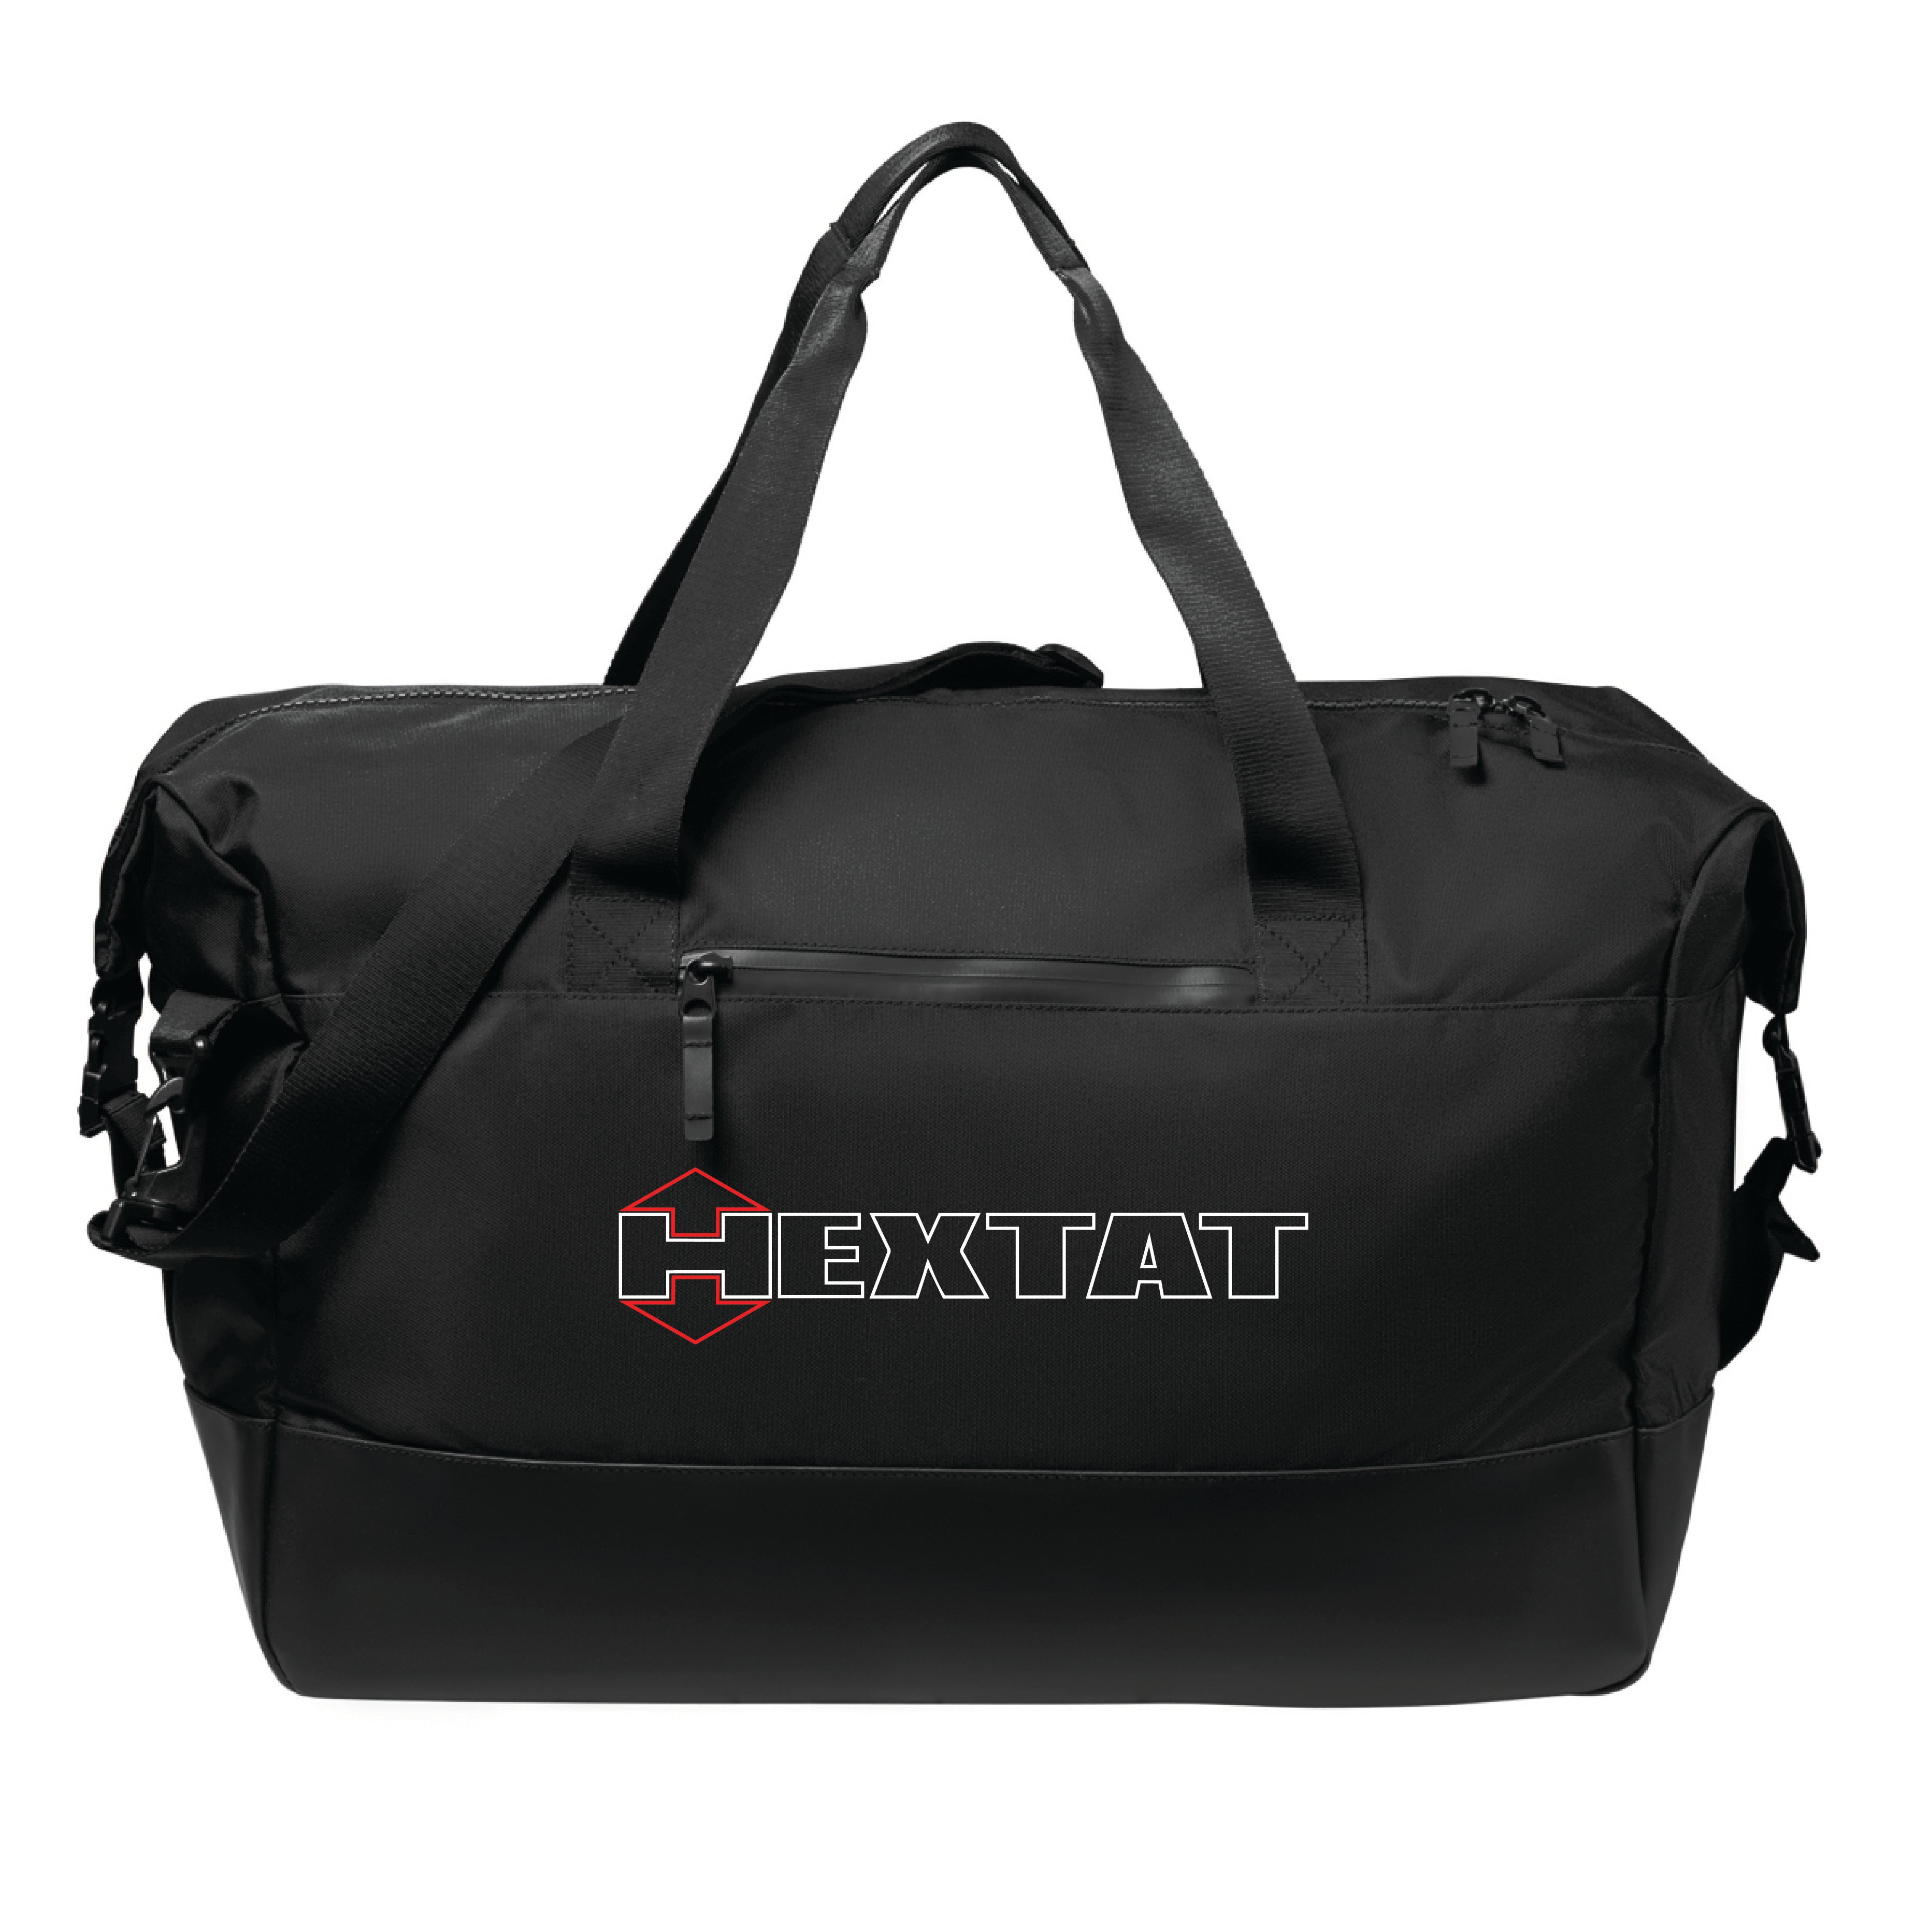 Black Embroidered Hextat Duffle Bag